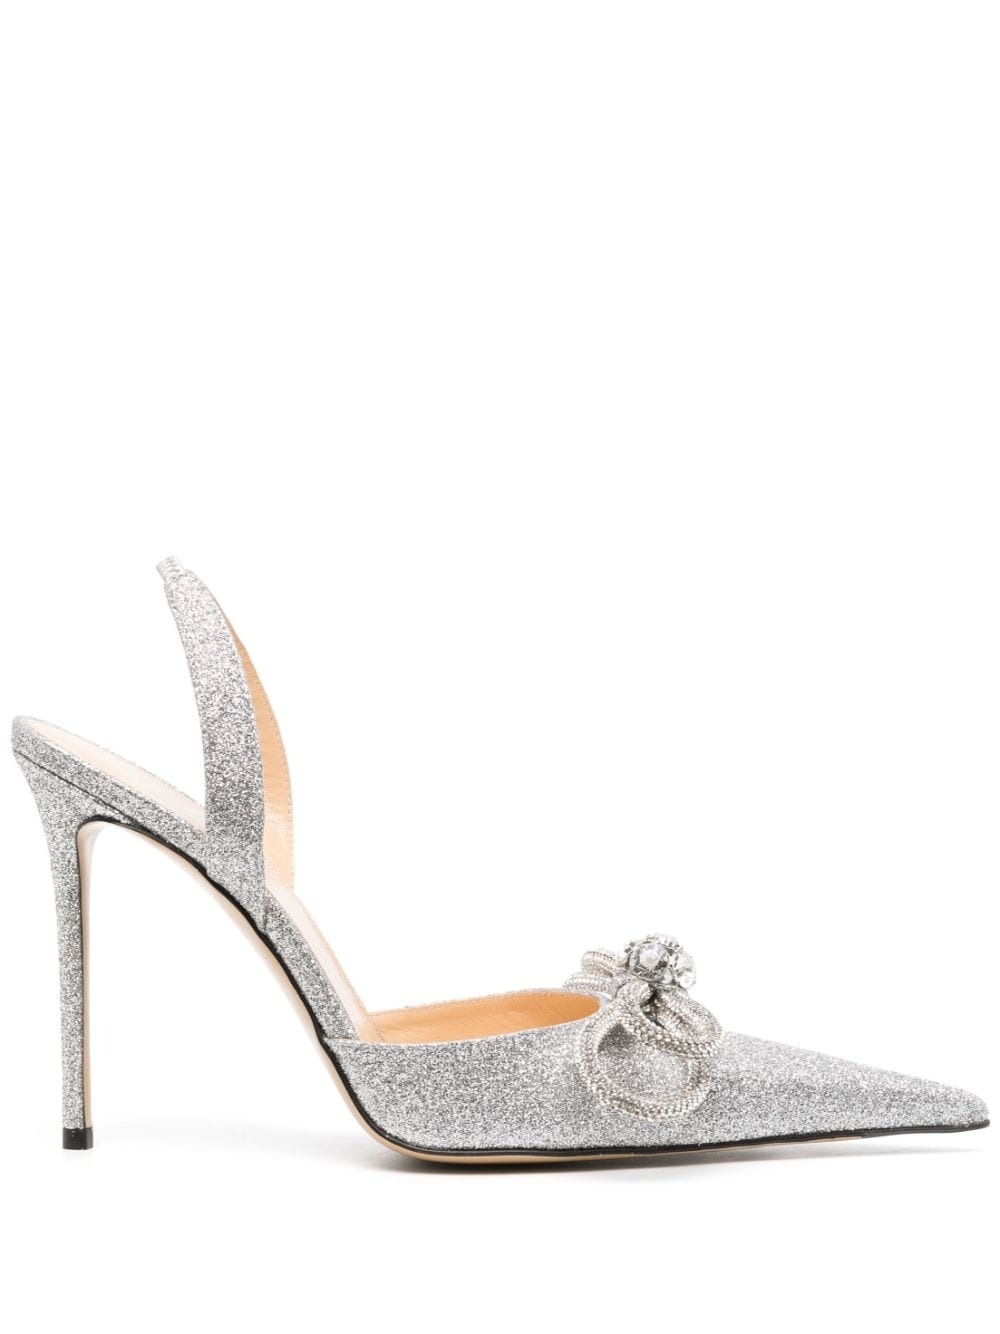 Buy High heels Mach & Mach double bow silver glitter slingback